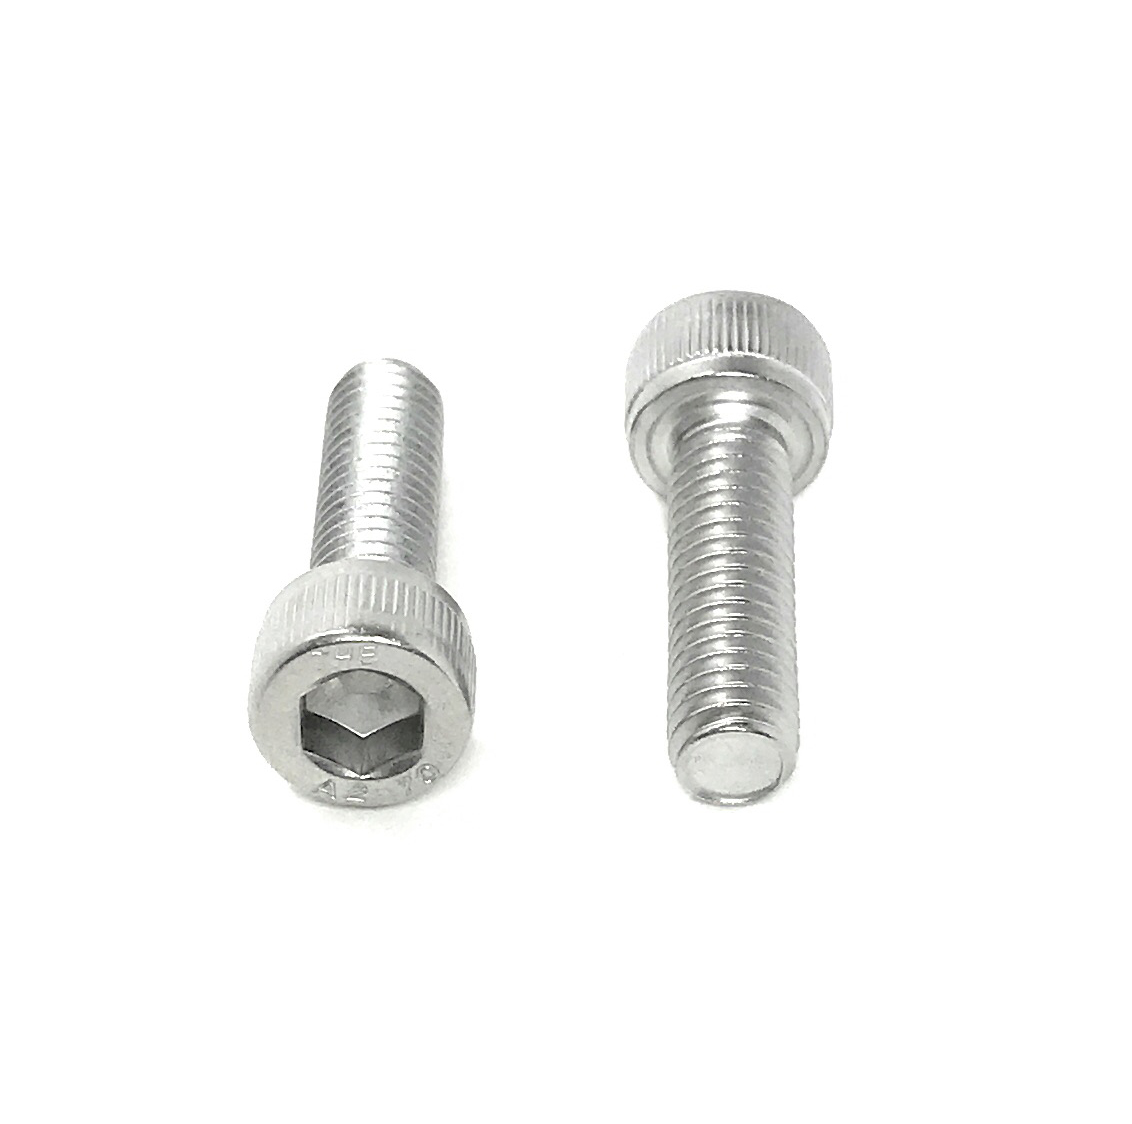 20 M8-1.25 x16 Stainless Steel Socket Head Socket Cap Screws DIN912 M8x1.25x16 